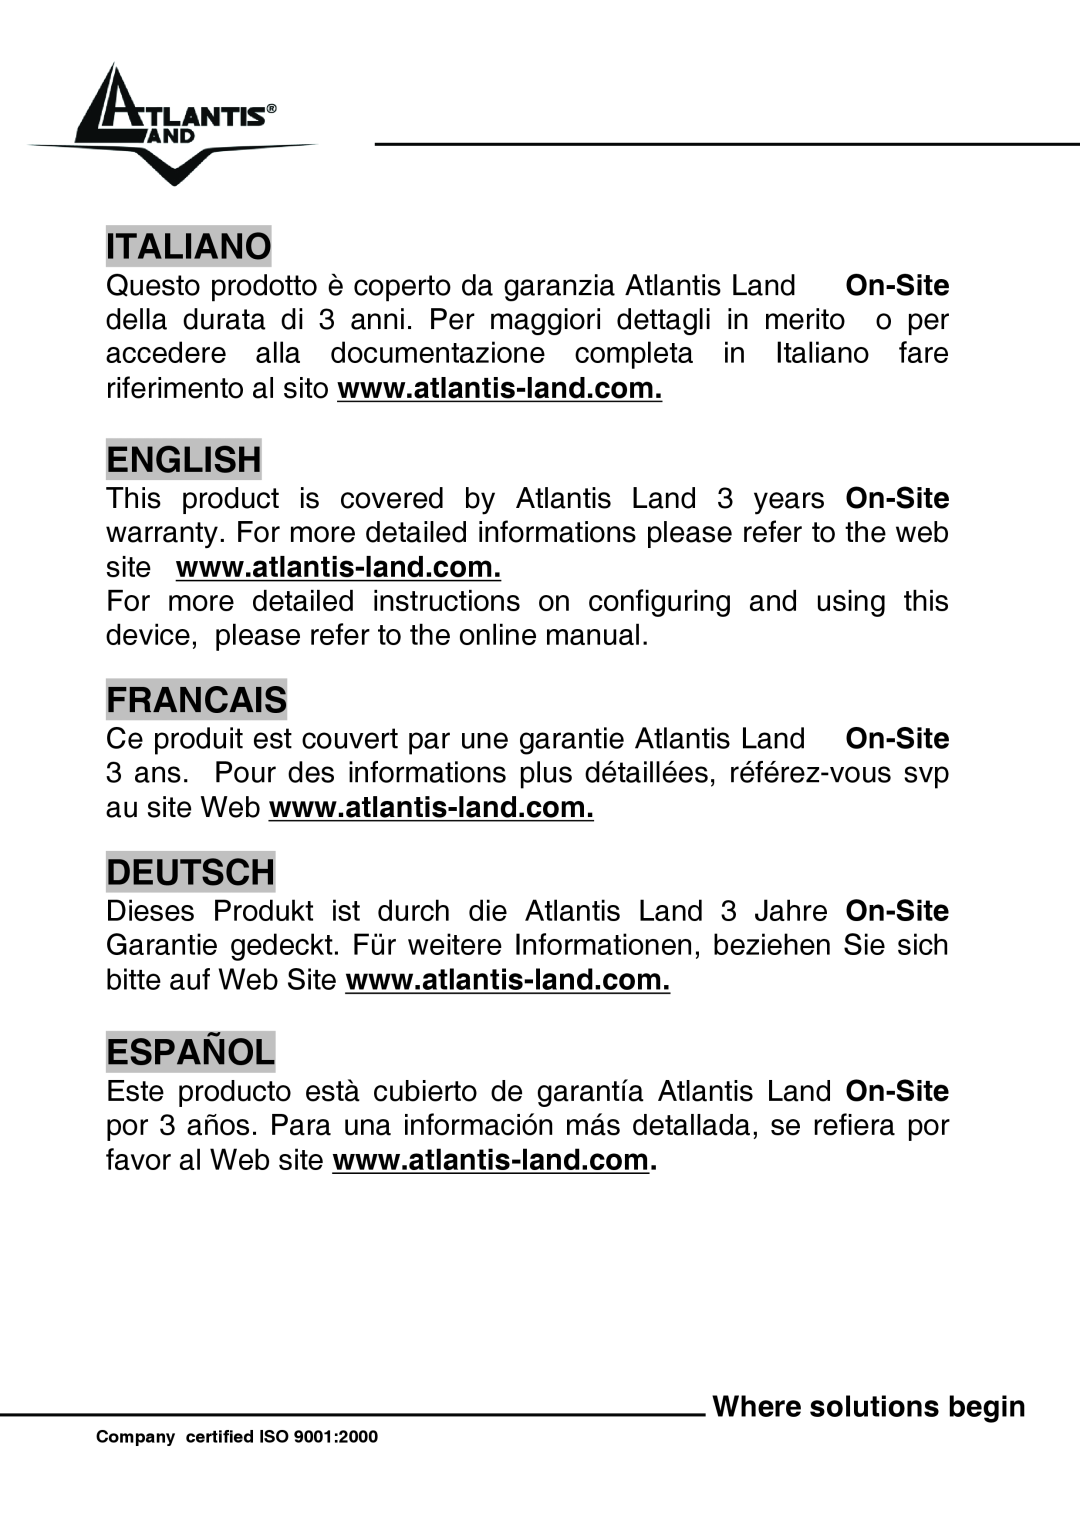 Atlantis Land A01-IU1 manual Italiano, English, Francais, Deutsch, Español, Where solutions begin, Company certified ISO 